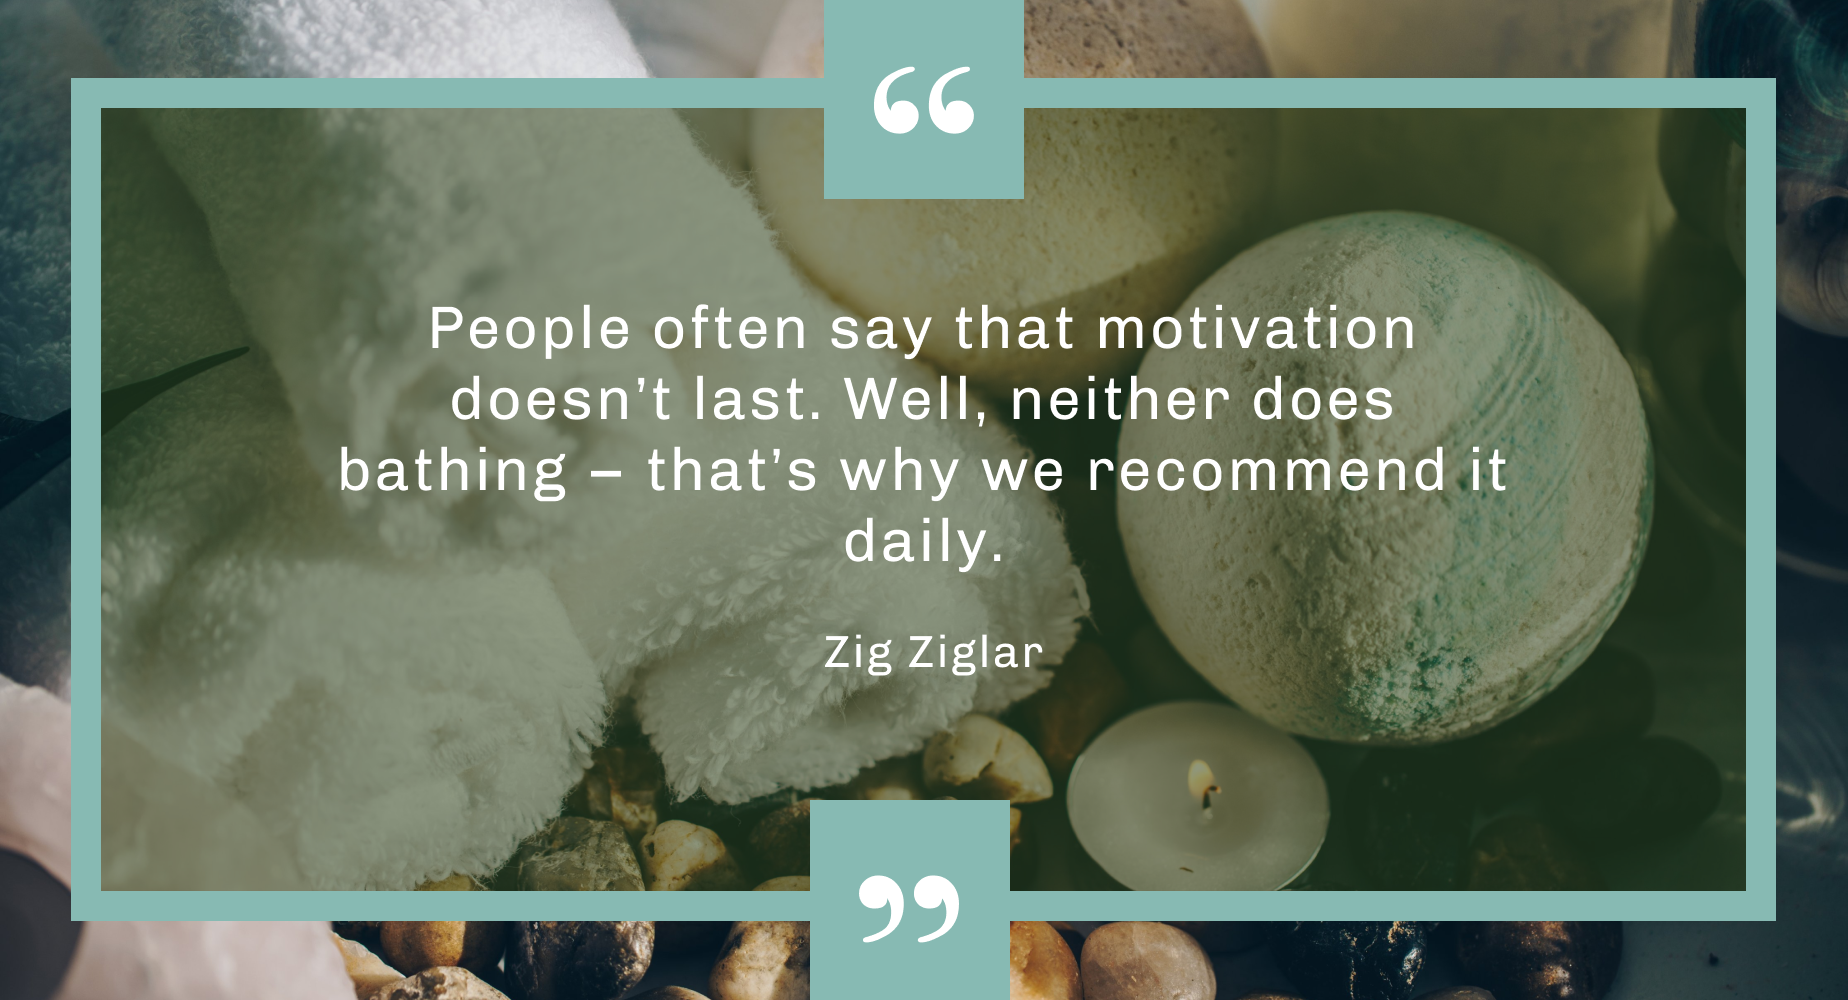 Funny motivational quote by Zig Ziglar